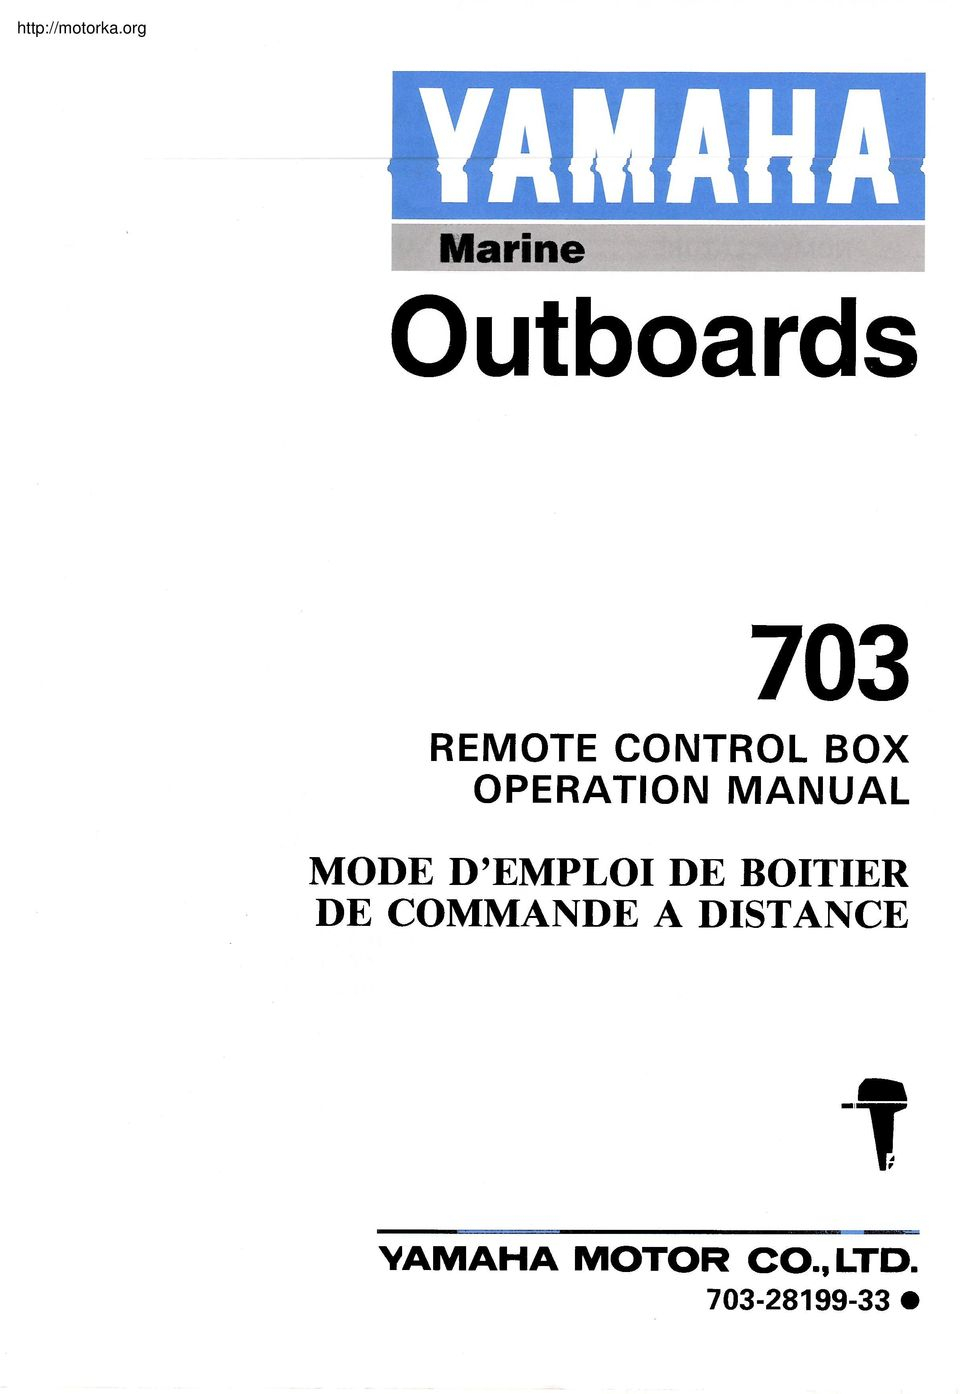 Mode D&amp;#039;emploi De Boitier De Commande A Distance. Marine Outboards - Yamaha 703 Remote Control Wiring Diagram